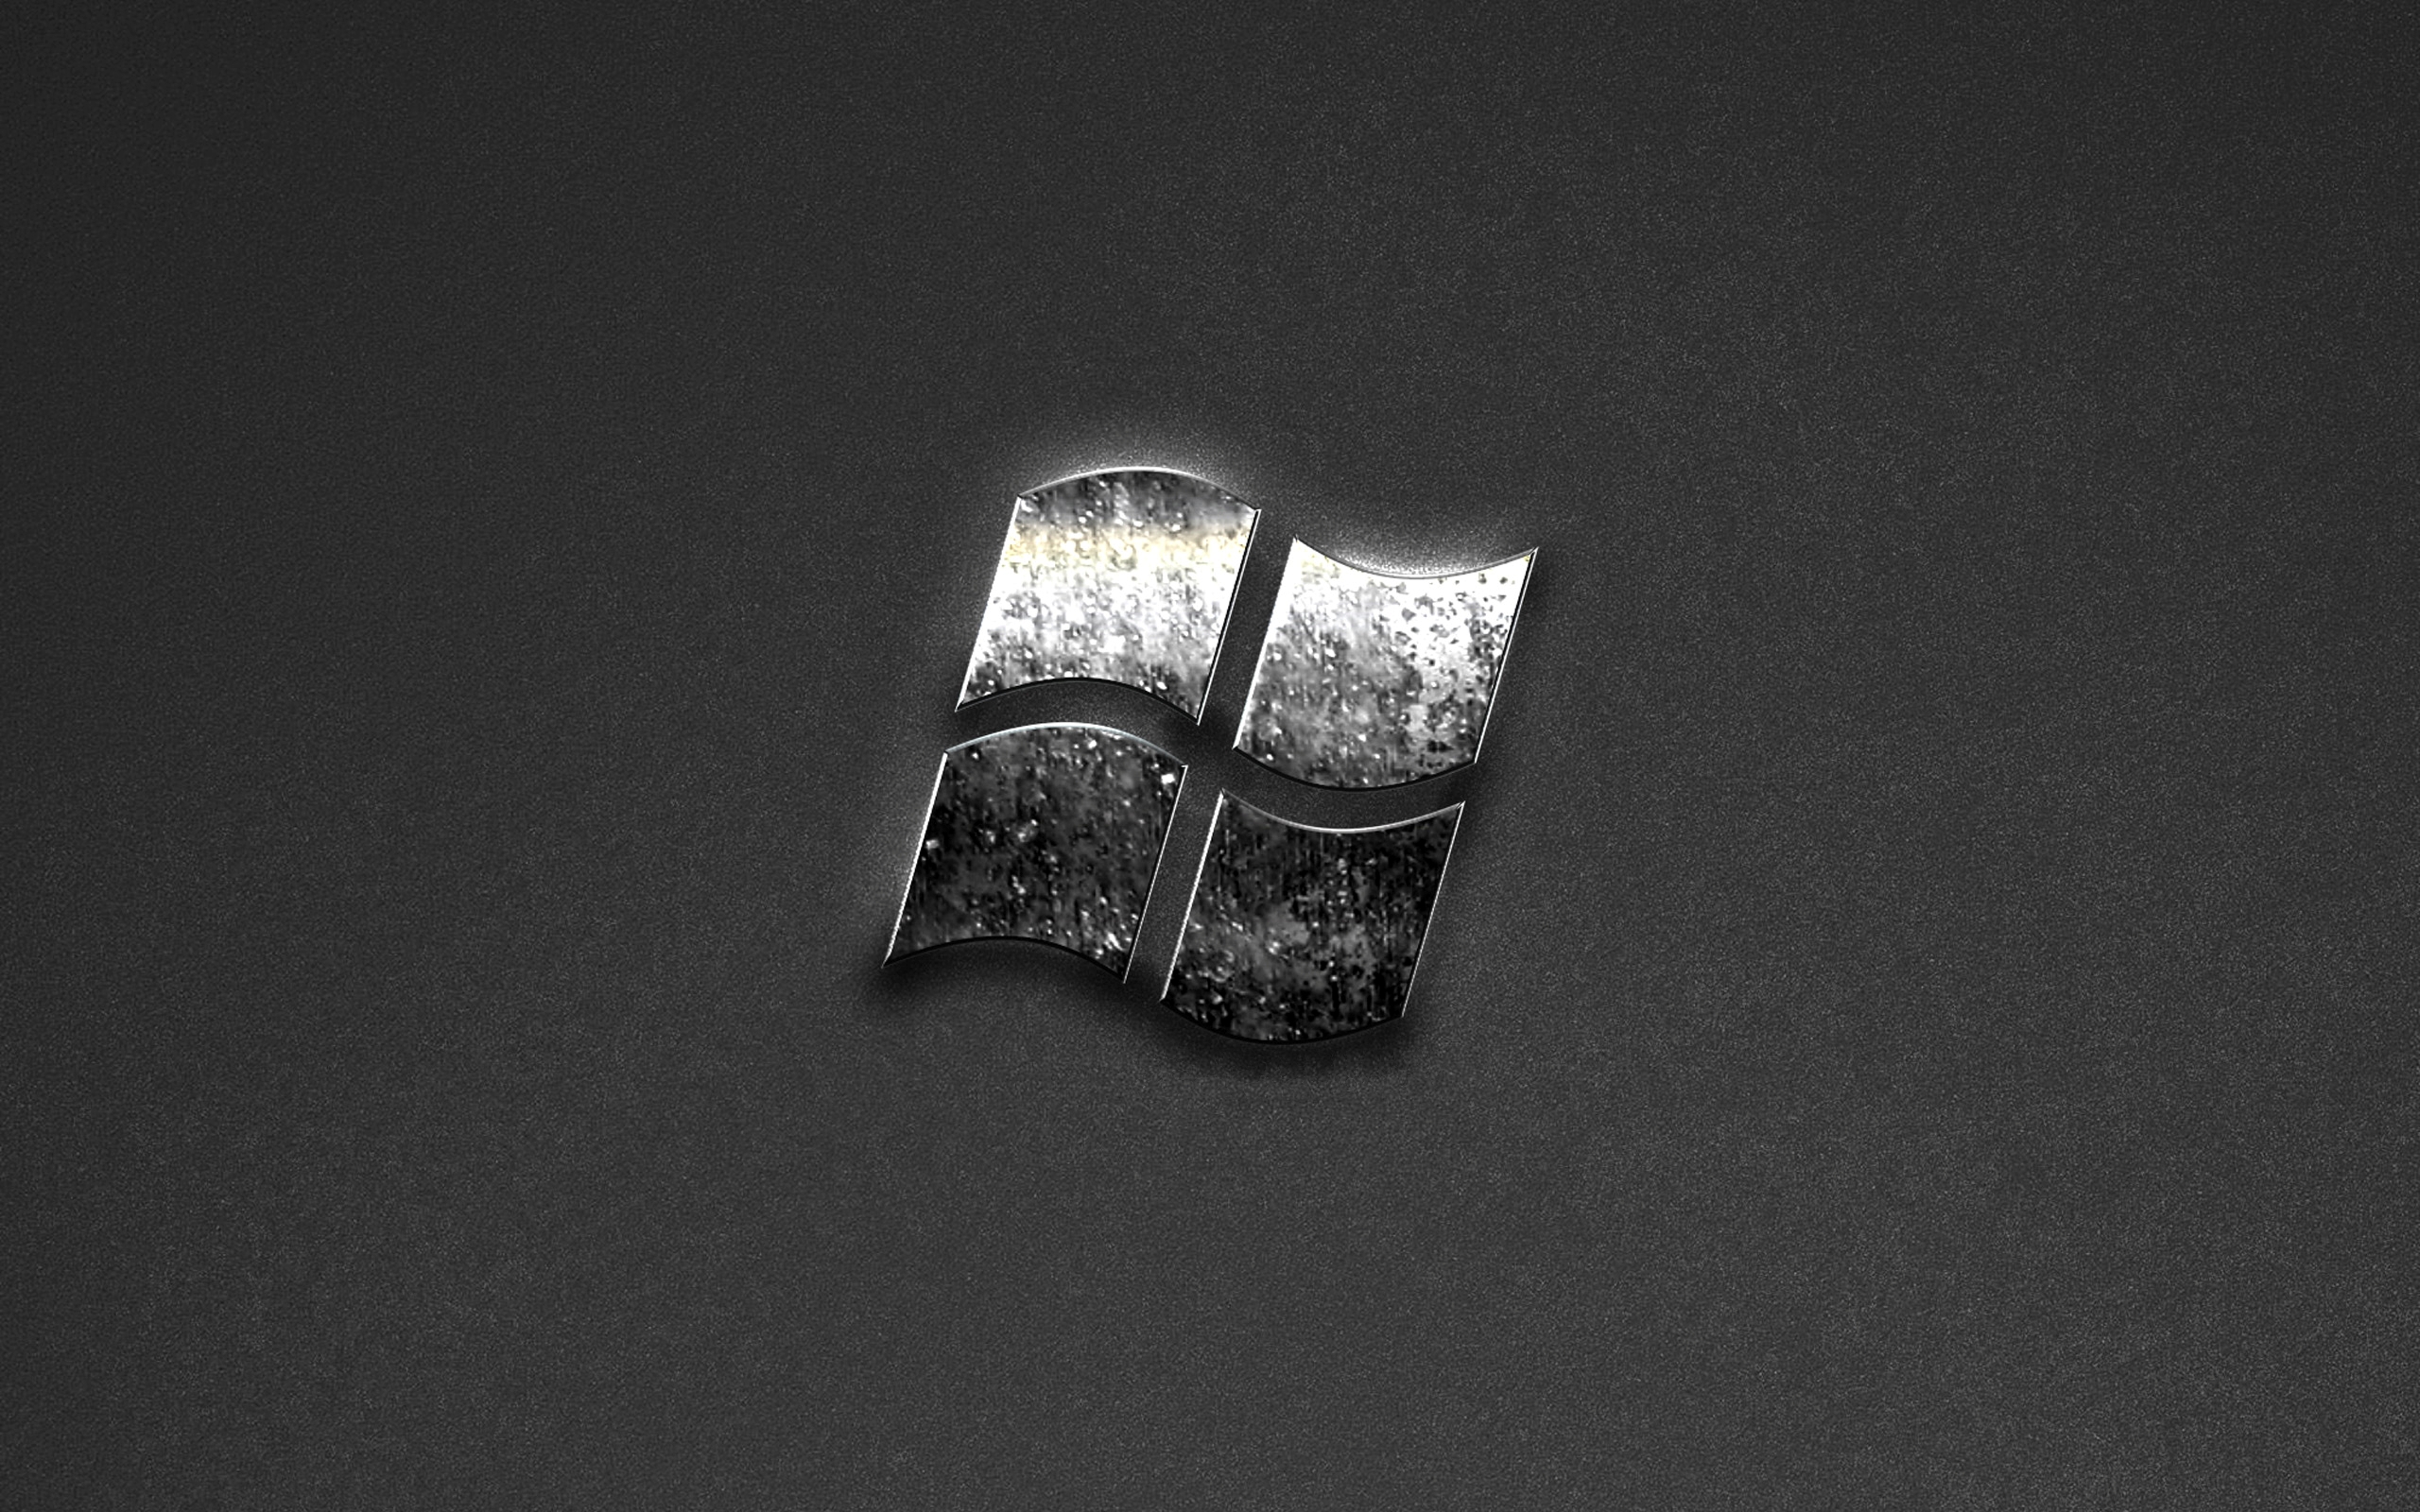 windows-logo-creative-metal-emblem-gray-background-2560x1600.jpg